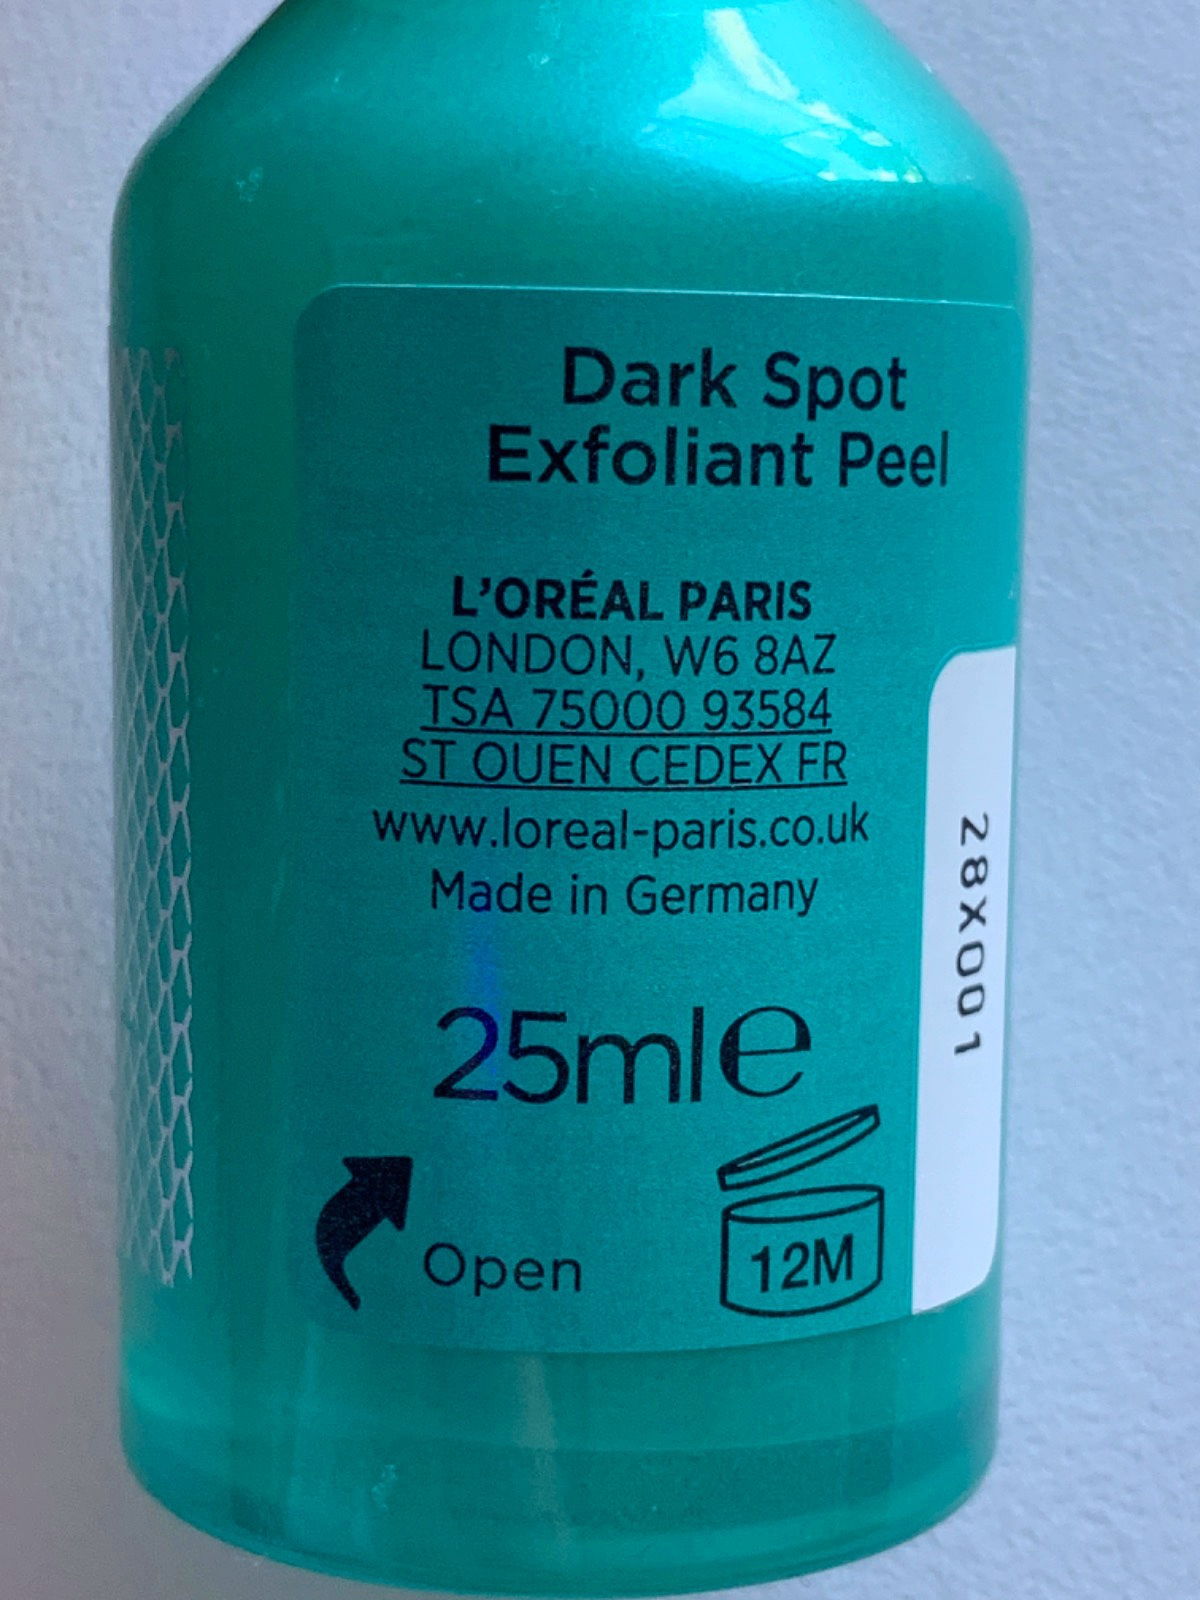 L'Oreal Paris Bright Reveal Dark Spot Exfoliant Peel 25ml